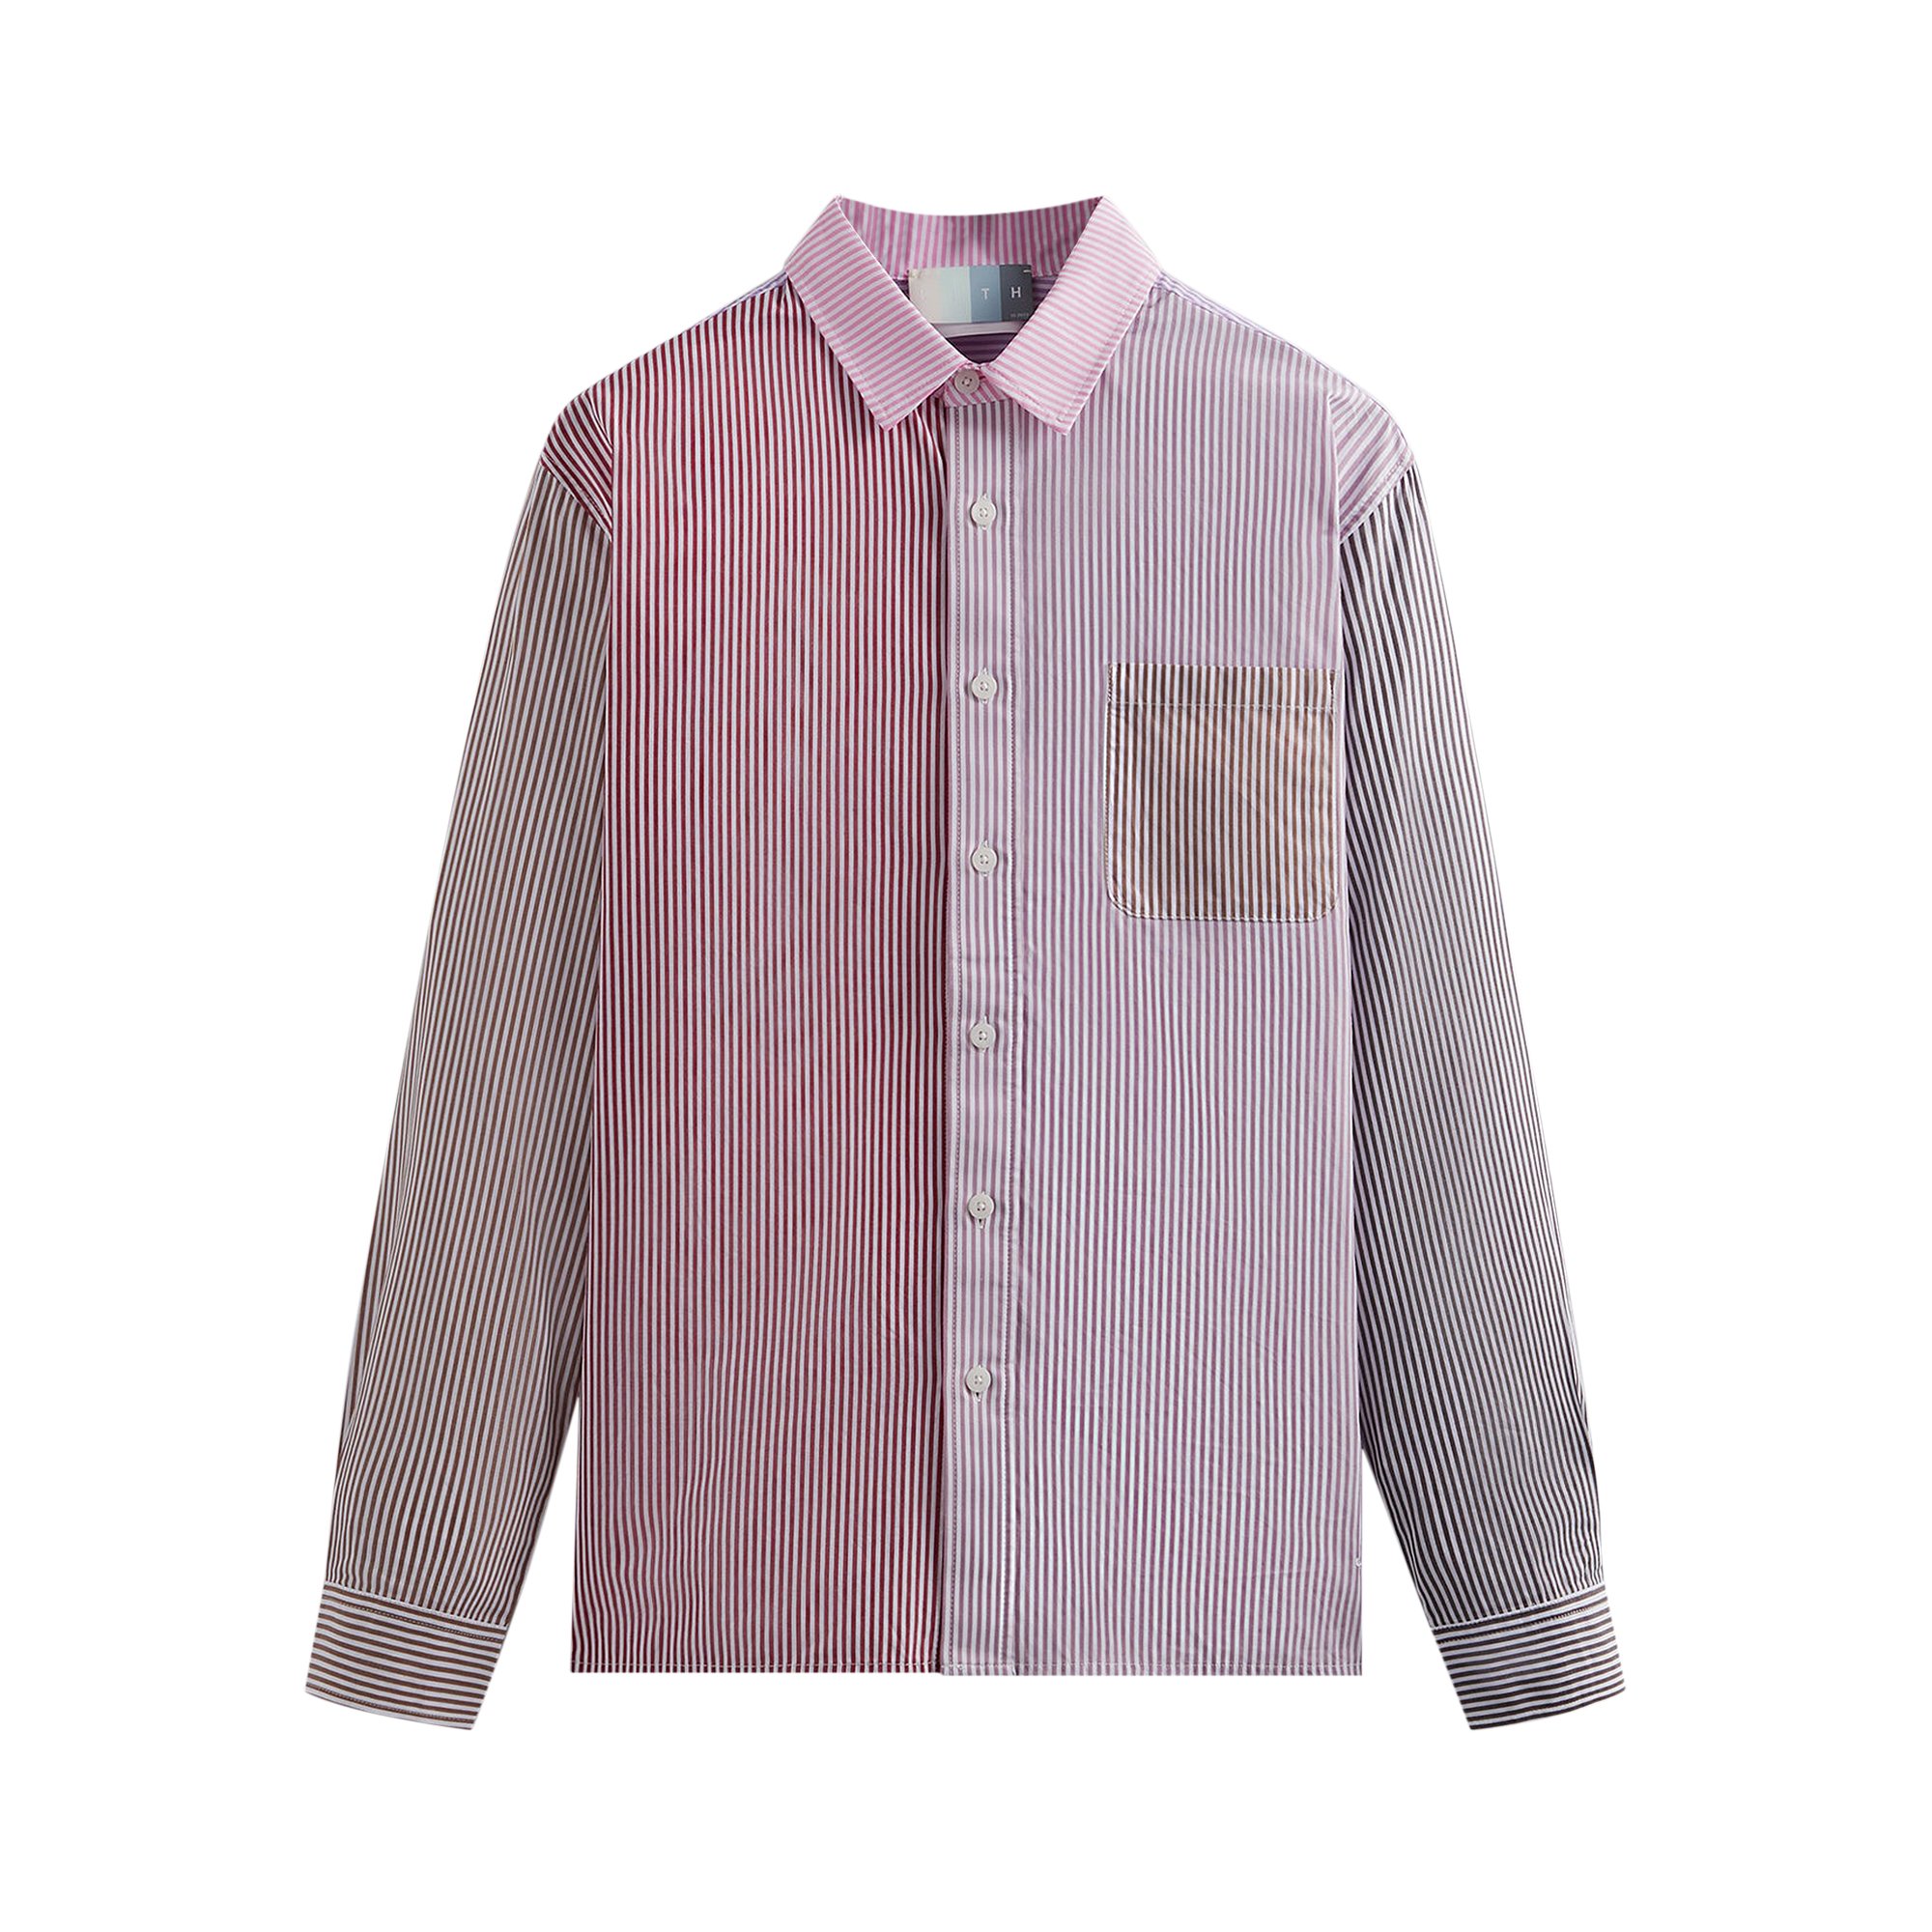 Buy Kith Striped Berkeley Button Down Shirt 'Bloom' - KHM030909 ...